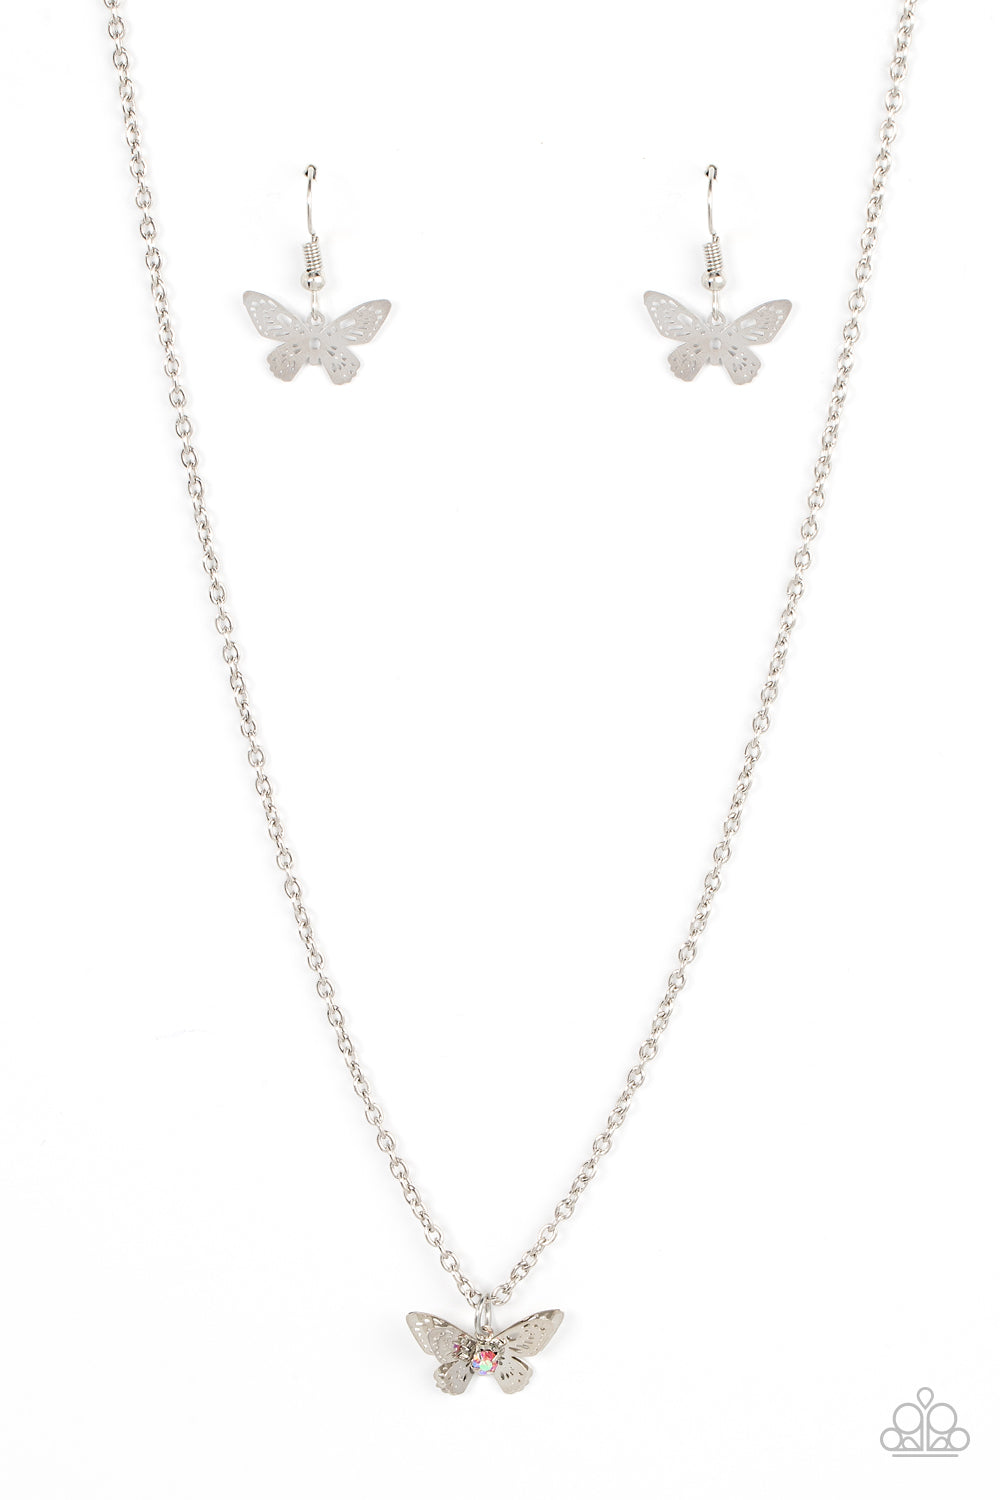 Flutter Love - Pink (Iridescent) Necklace freeshipping - JewLz4u Gemstone Gallery